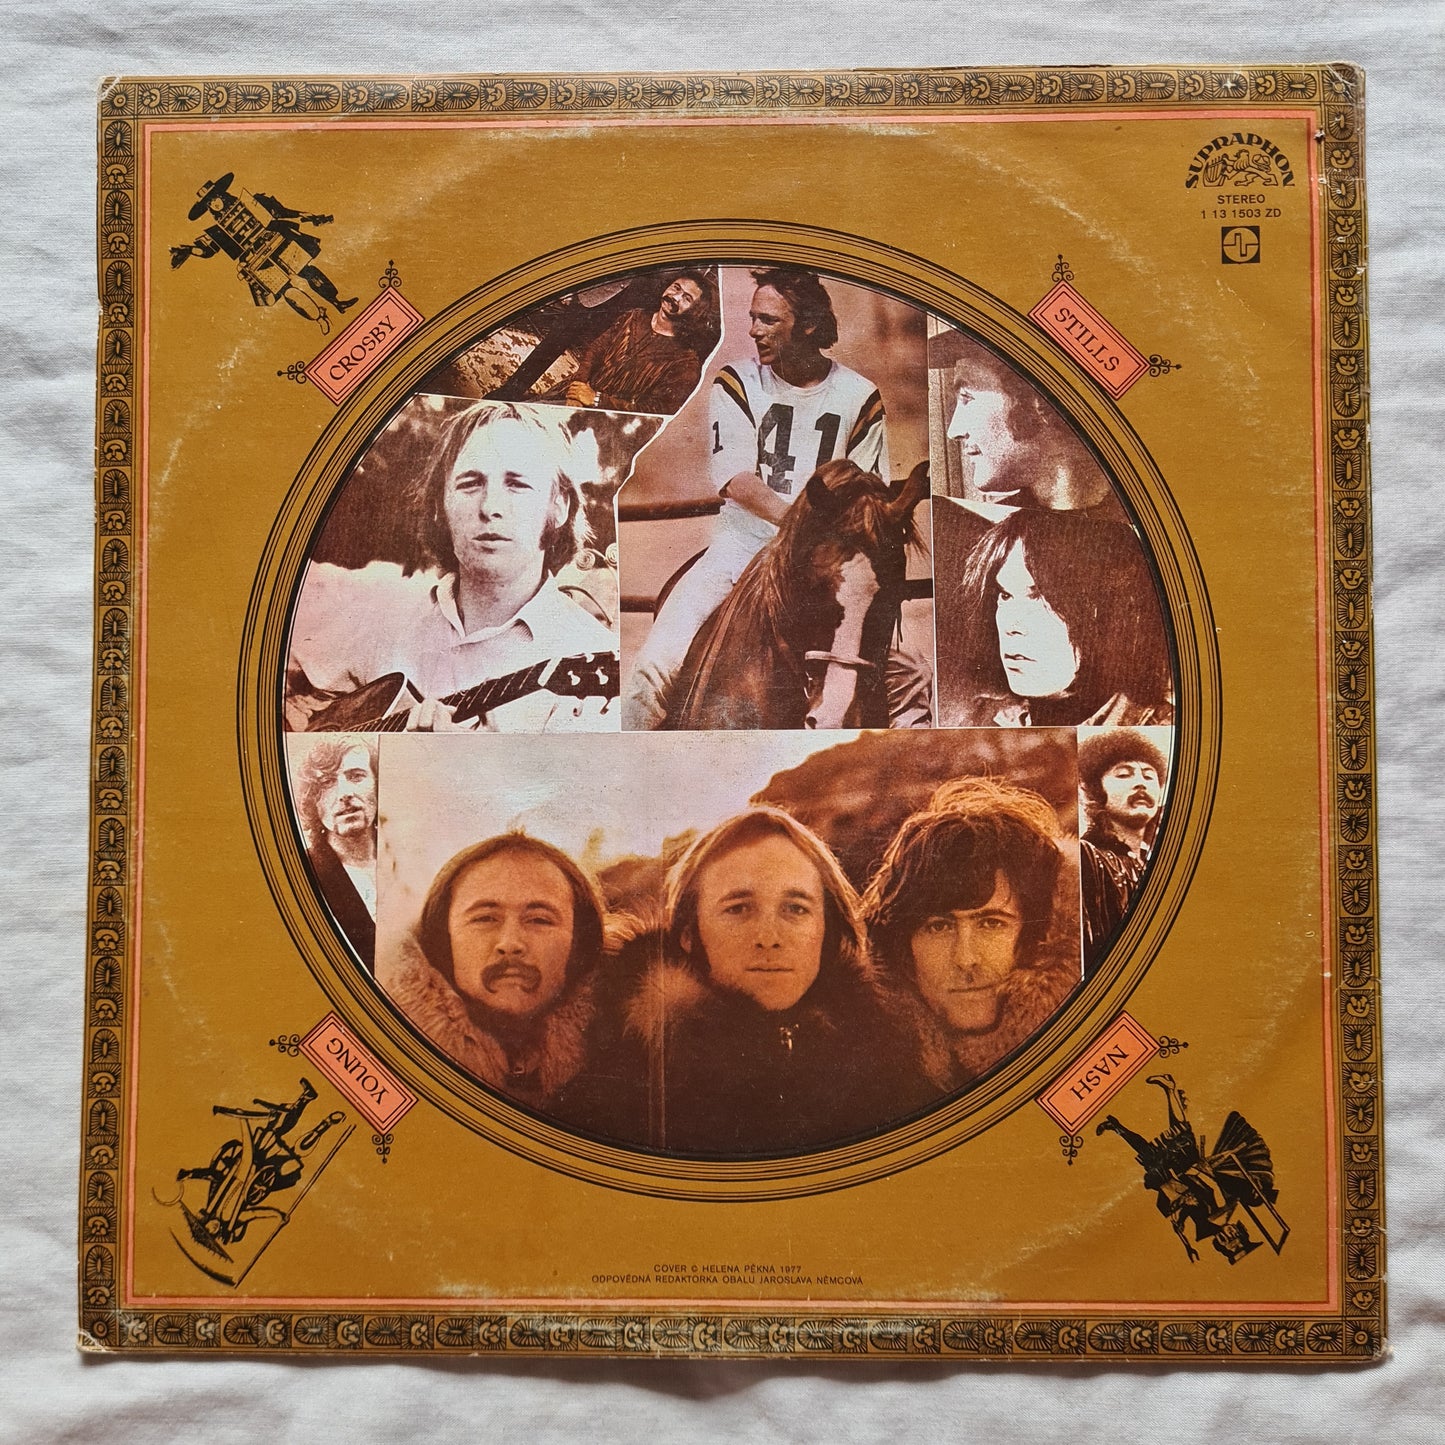 Crosby, Stills, Nash & Young – Deja Vu (alternate cover) - 1970 - Vinyl Record